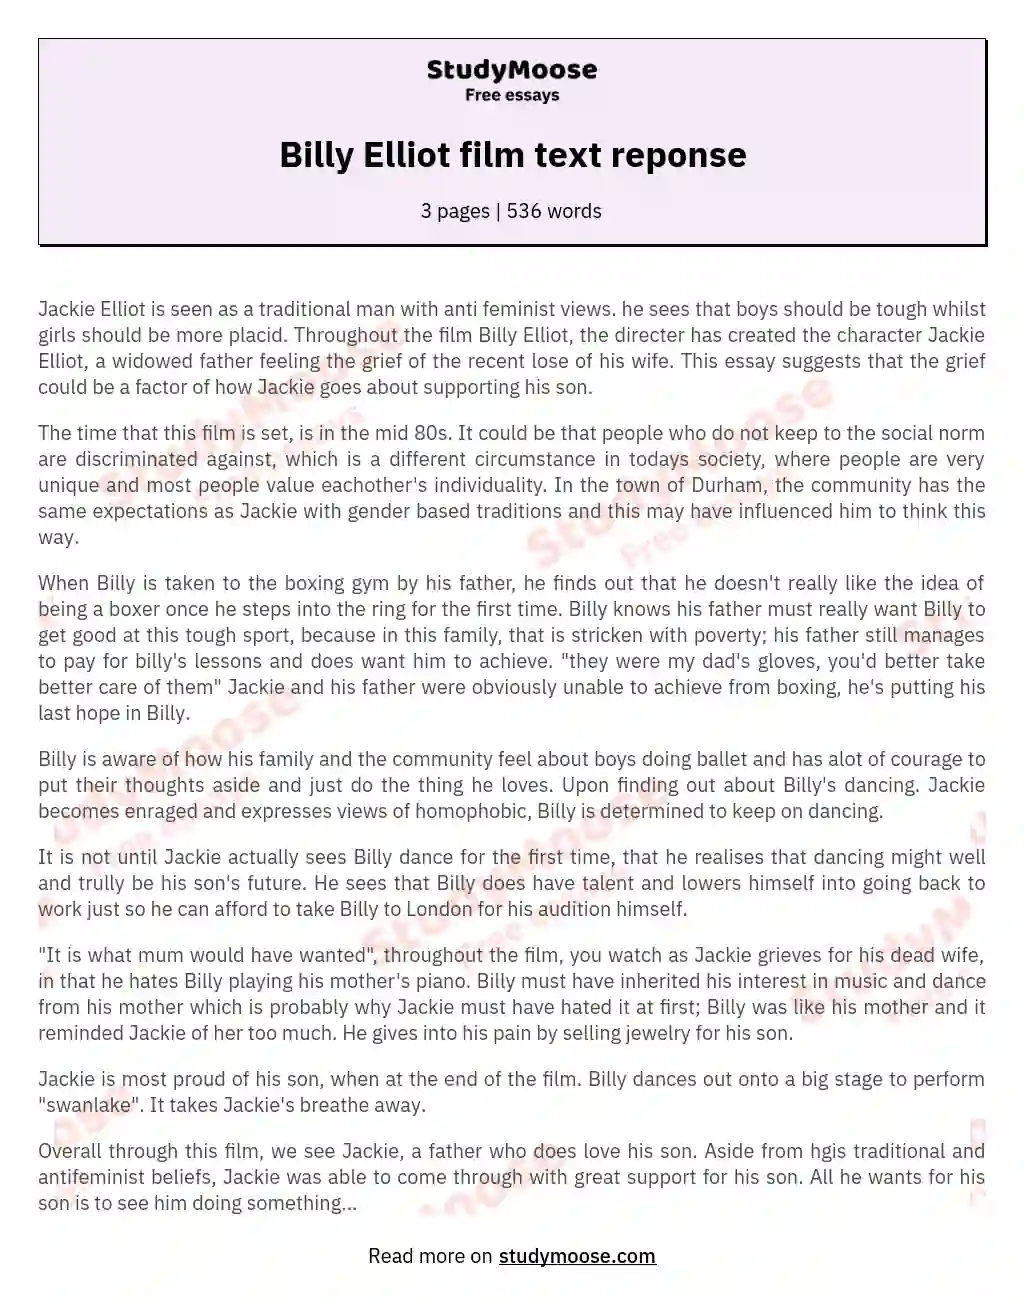 Billy Elliot film text reponse essay